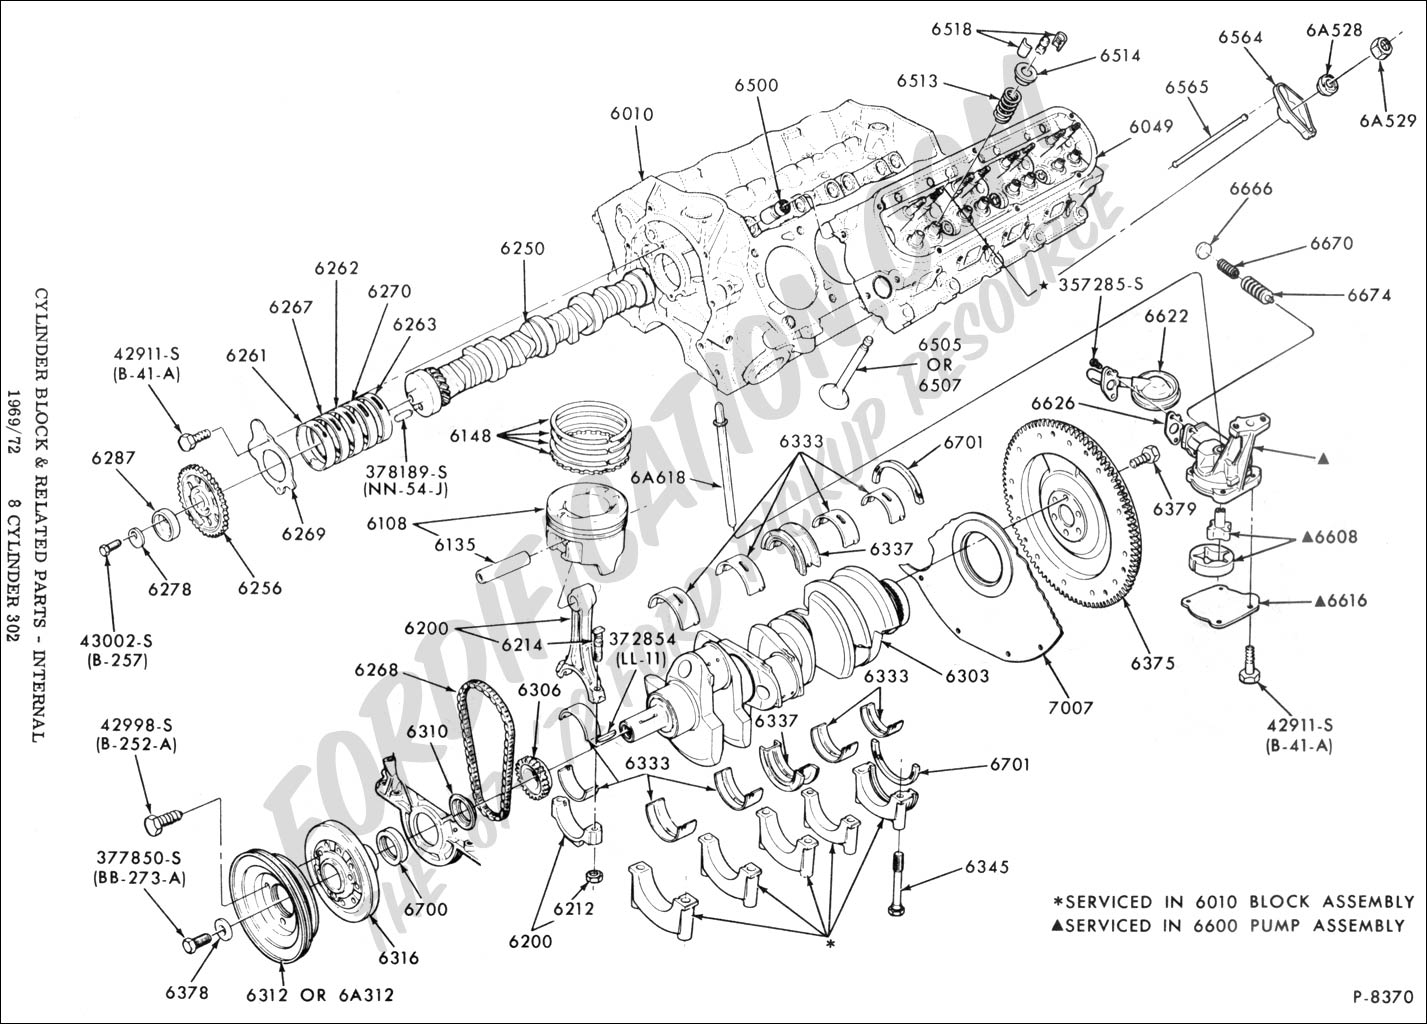 Diagram] 1978 Ford 351 Engine Diagram Full Version Hd